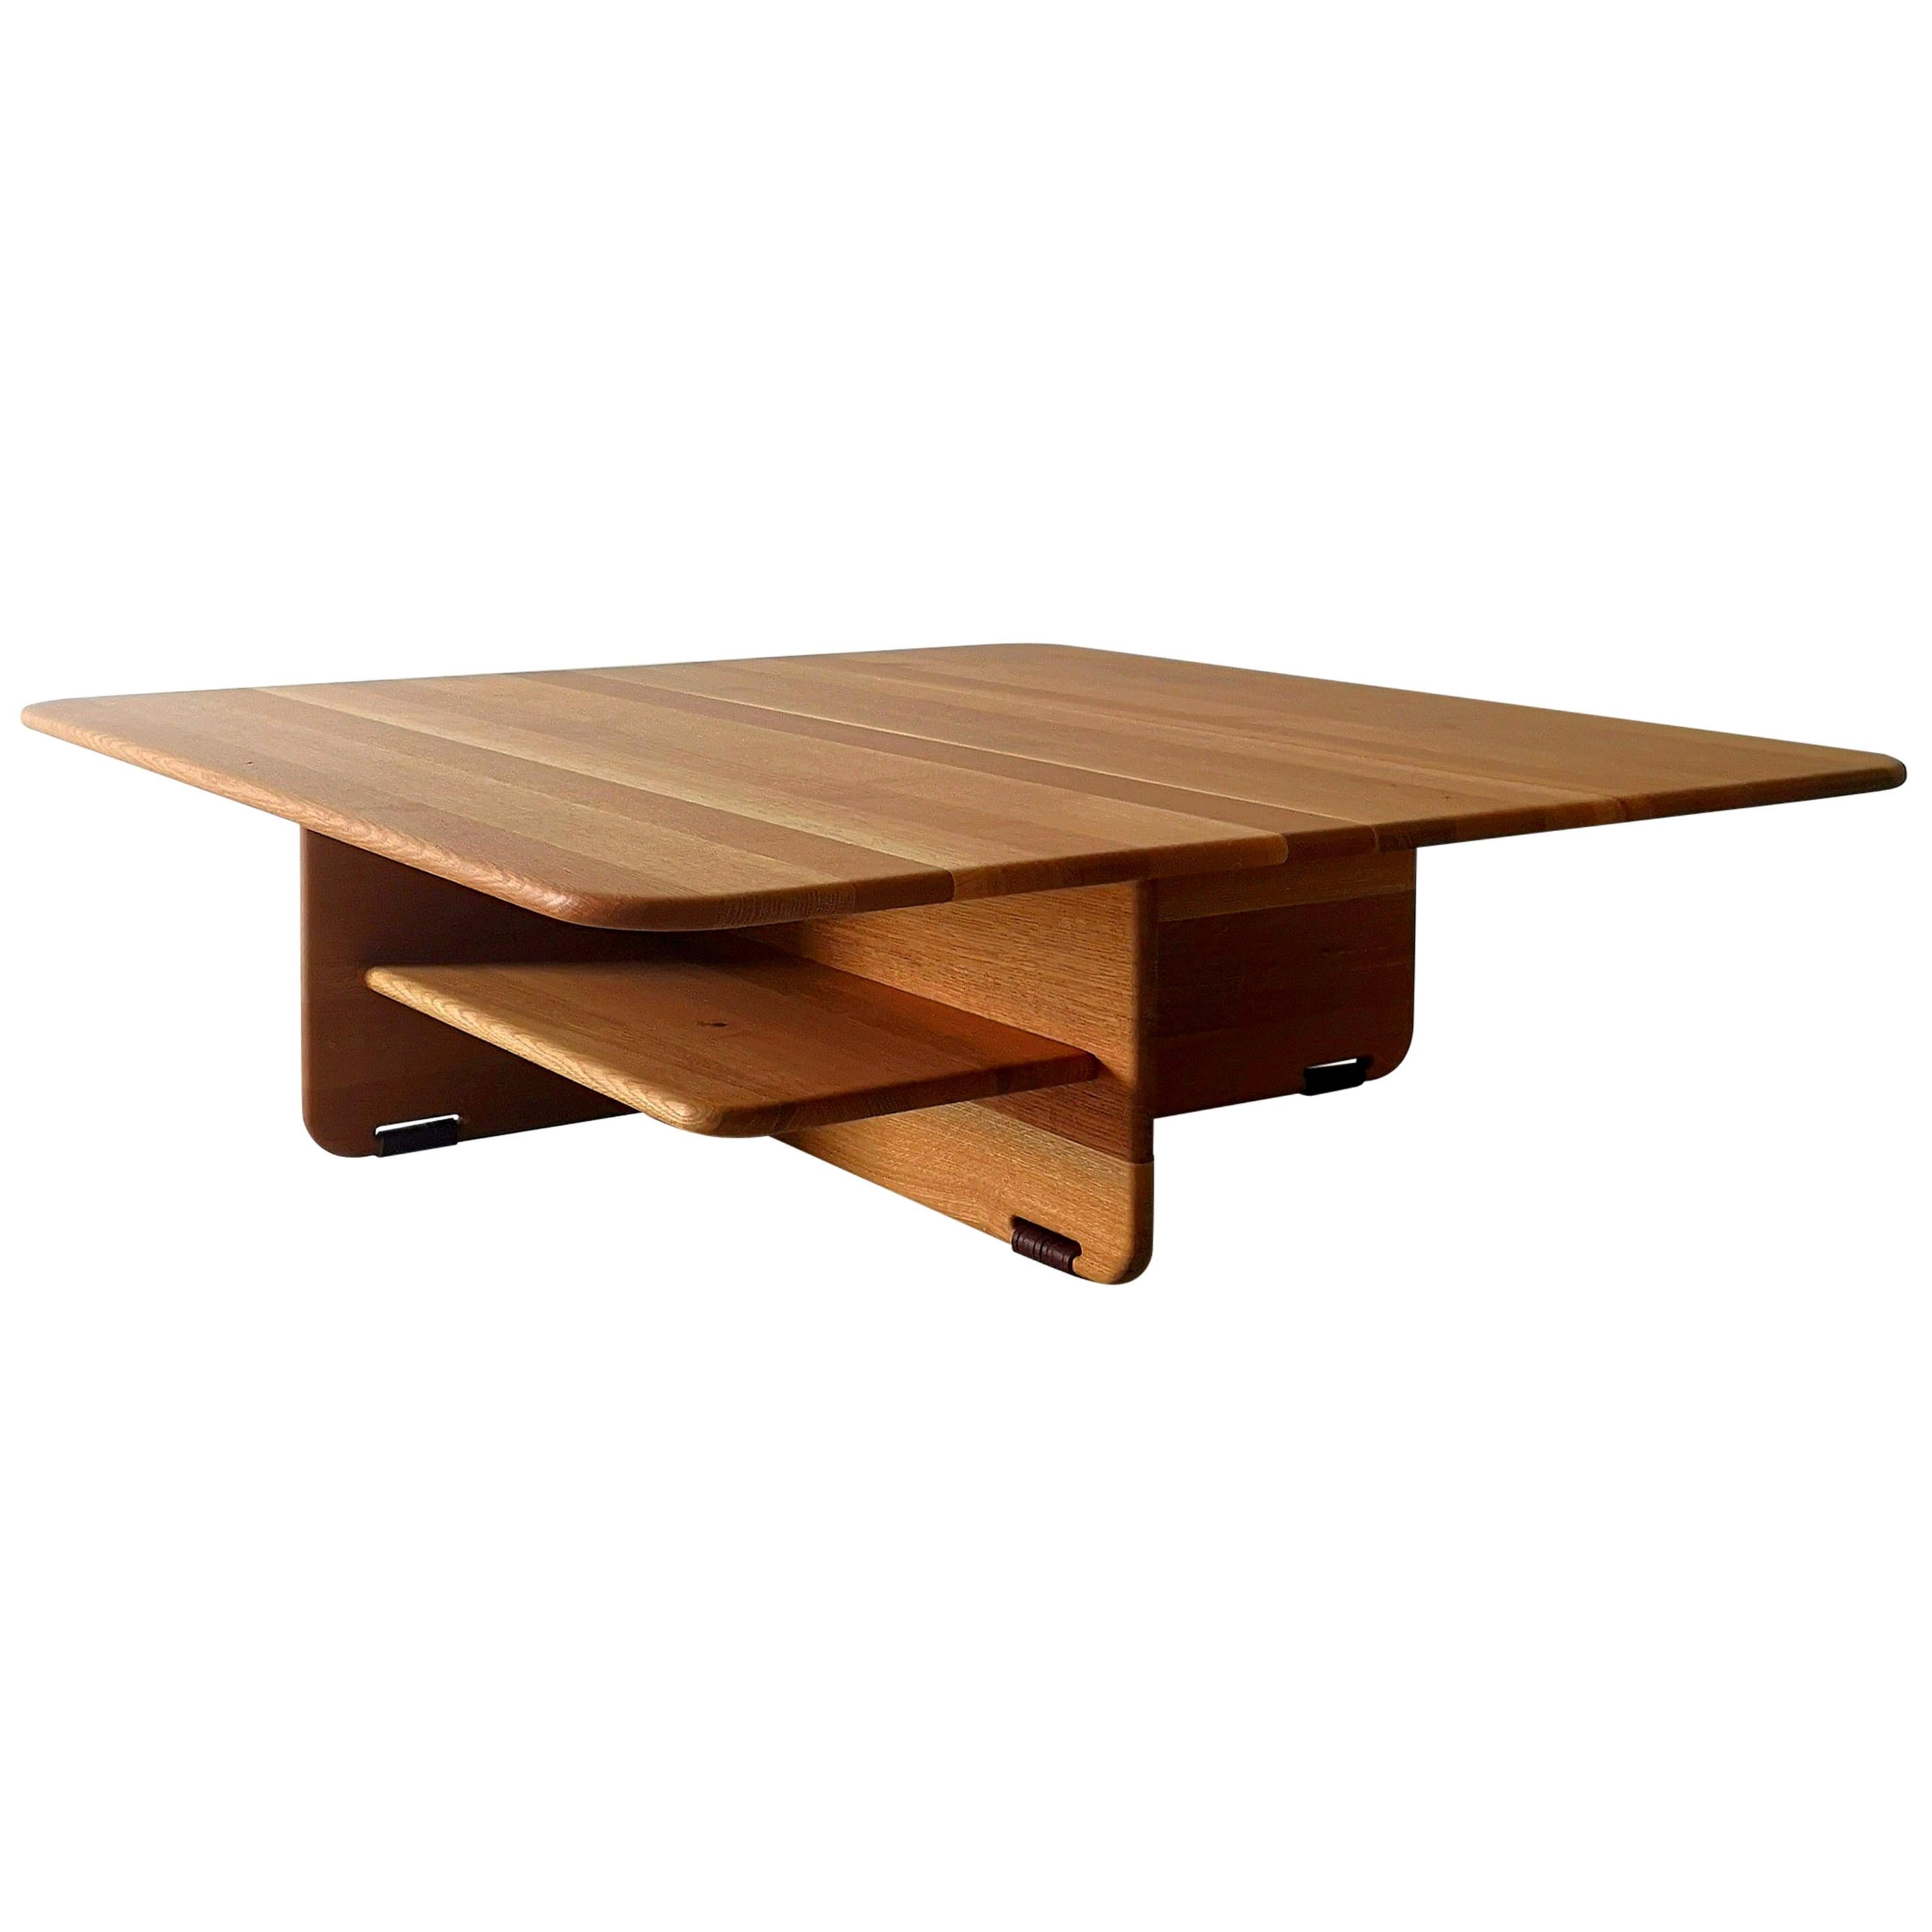 Alar Solid Hardwood Coffee Table by Izm Design